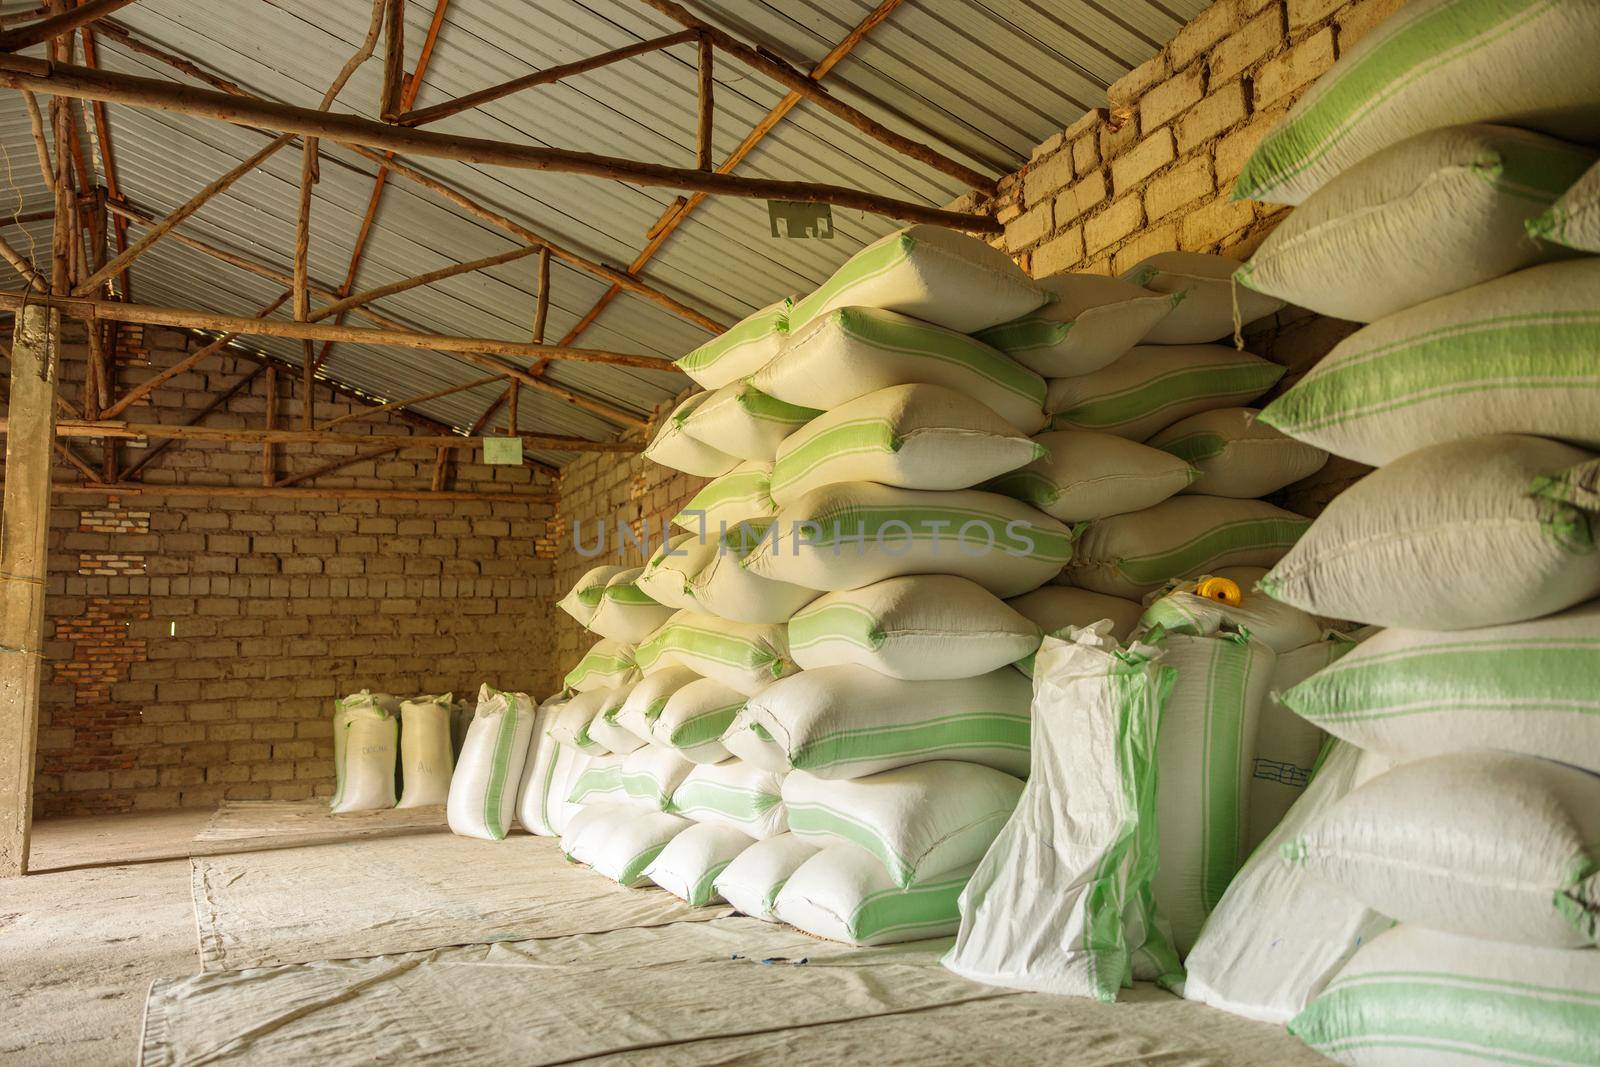 Warehouse for coffee at farm in Africa region by Yaroslav_astakhov